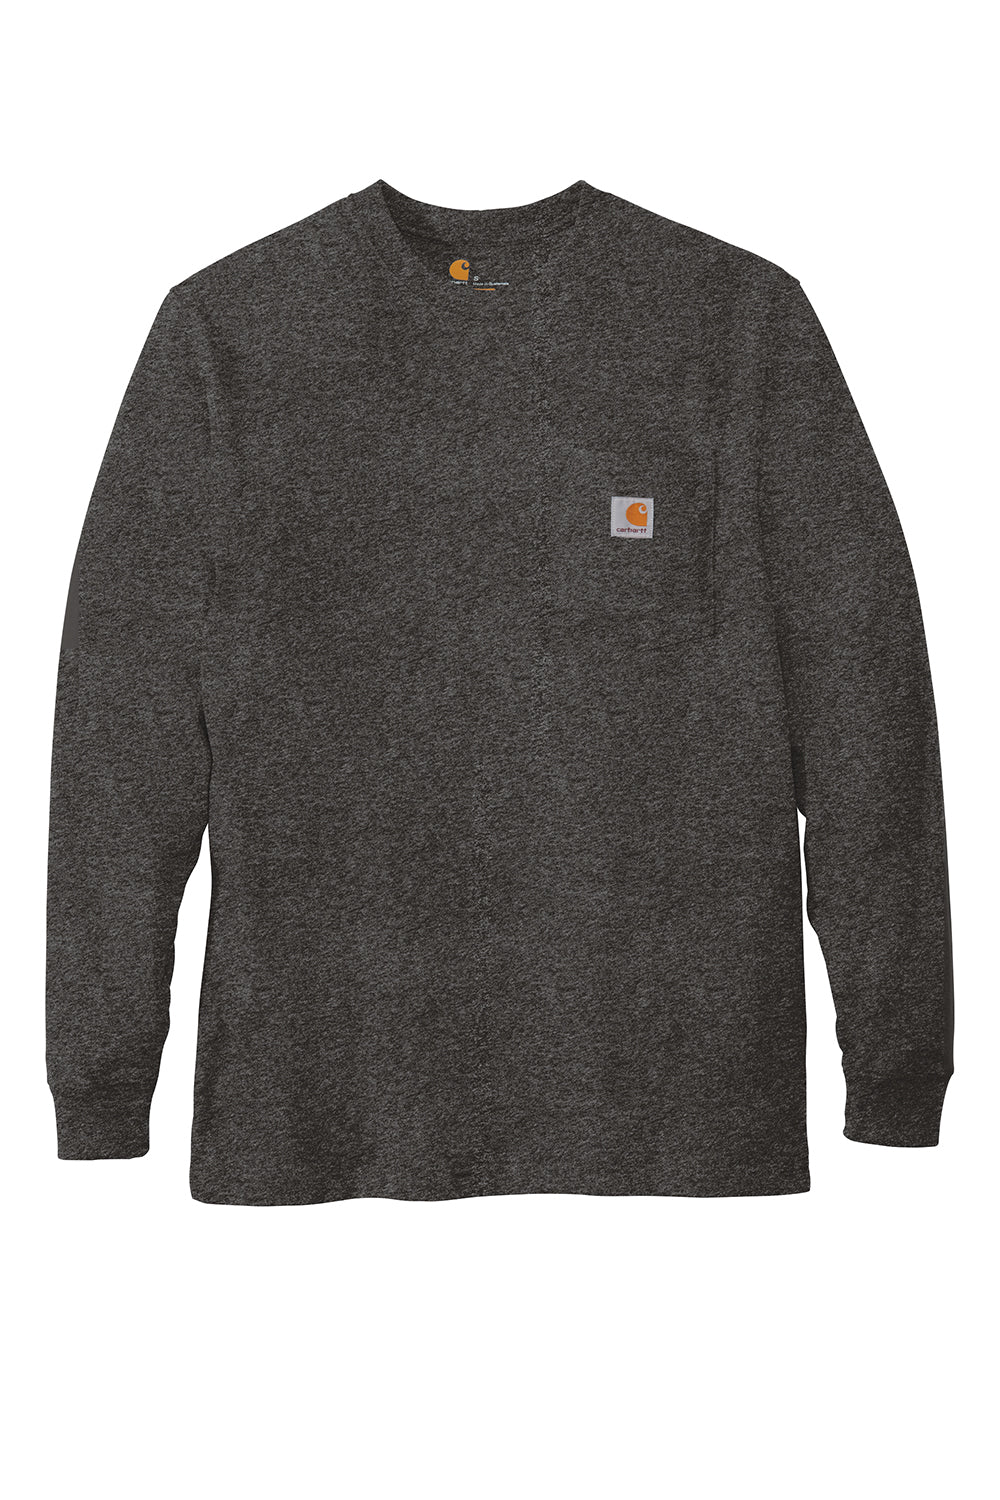 Carhartt CTK126 Mens Workwear Long Sleeve Crewneck T-Shirt w/ Pocket Heather Carbon Grey Flat Front